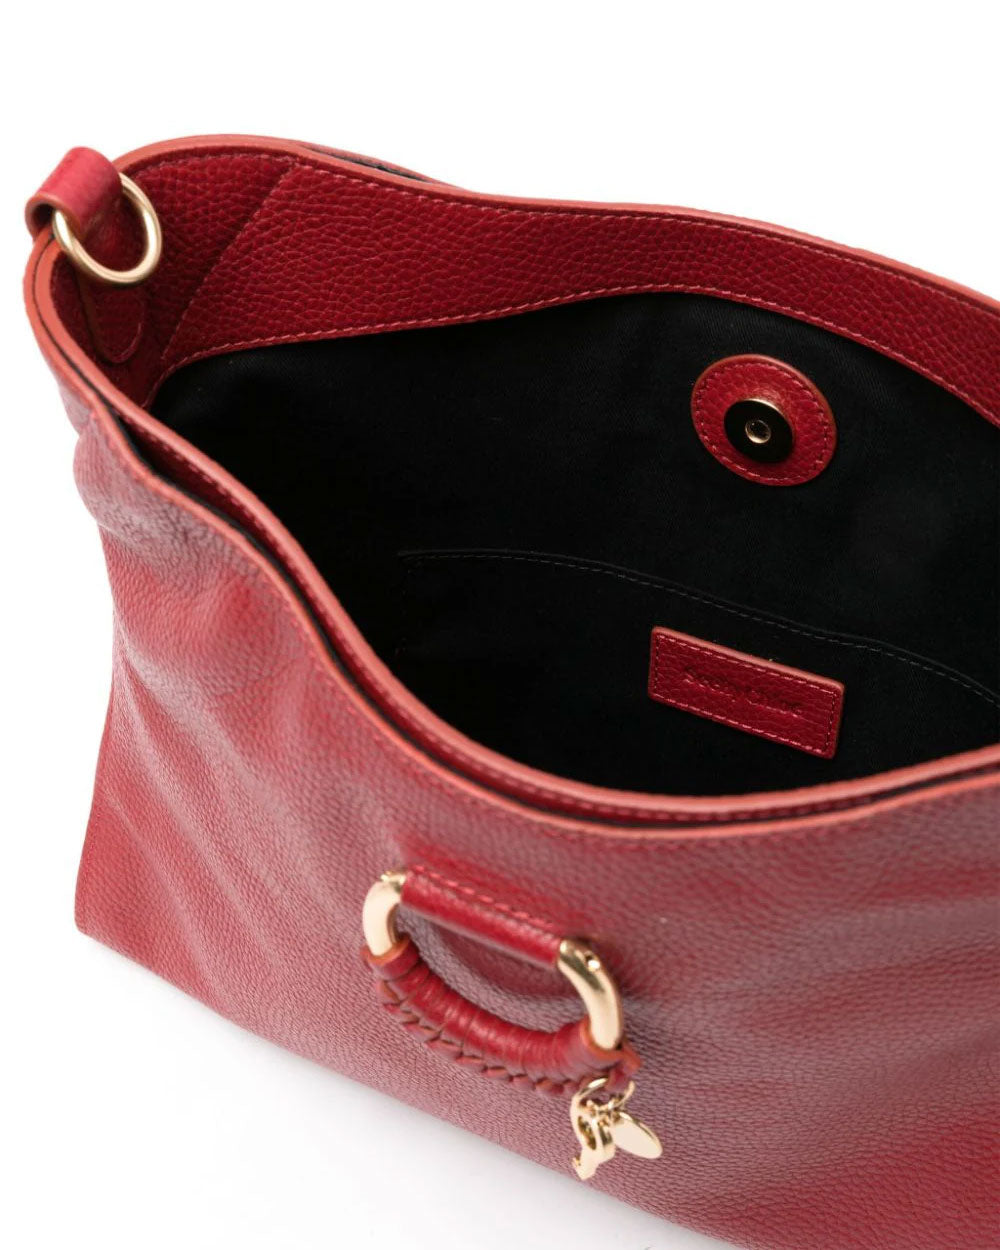 Small Joan Shoulder Bag in Red